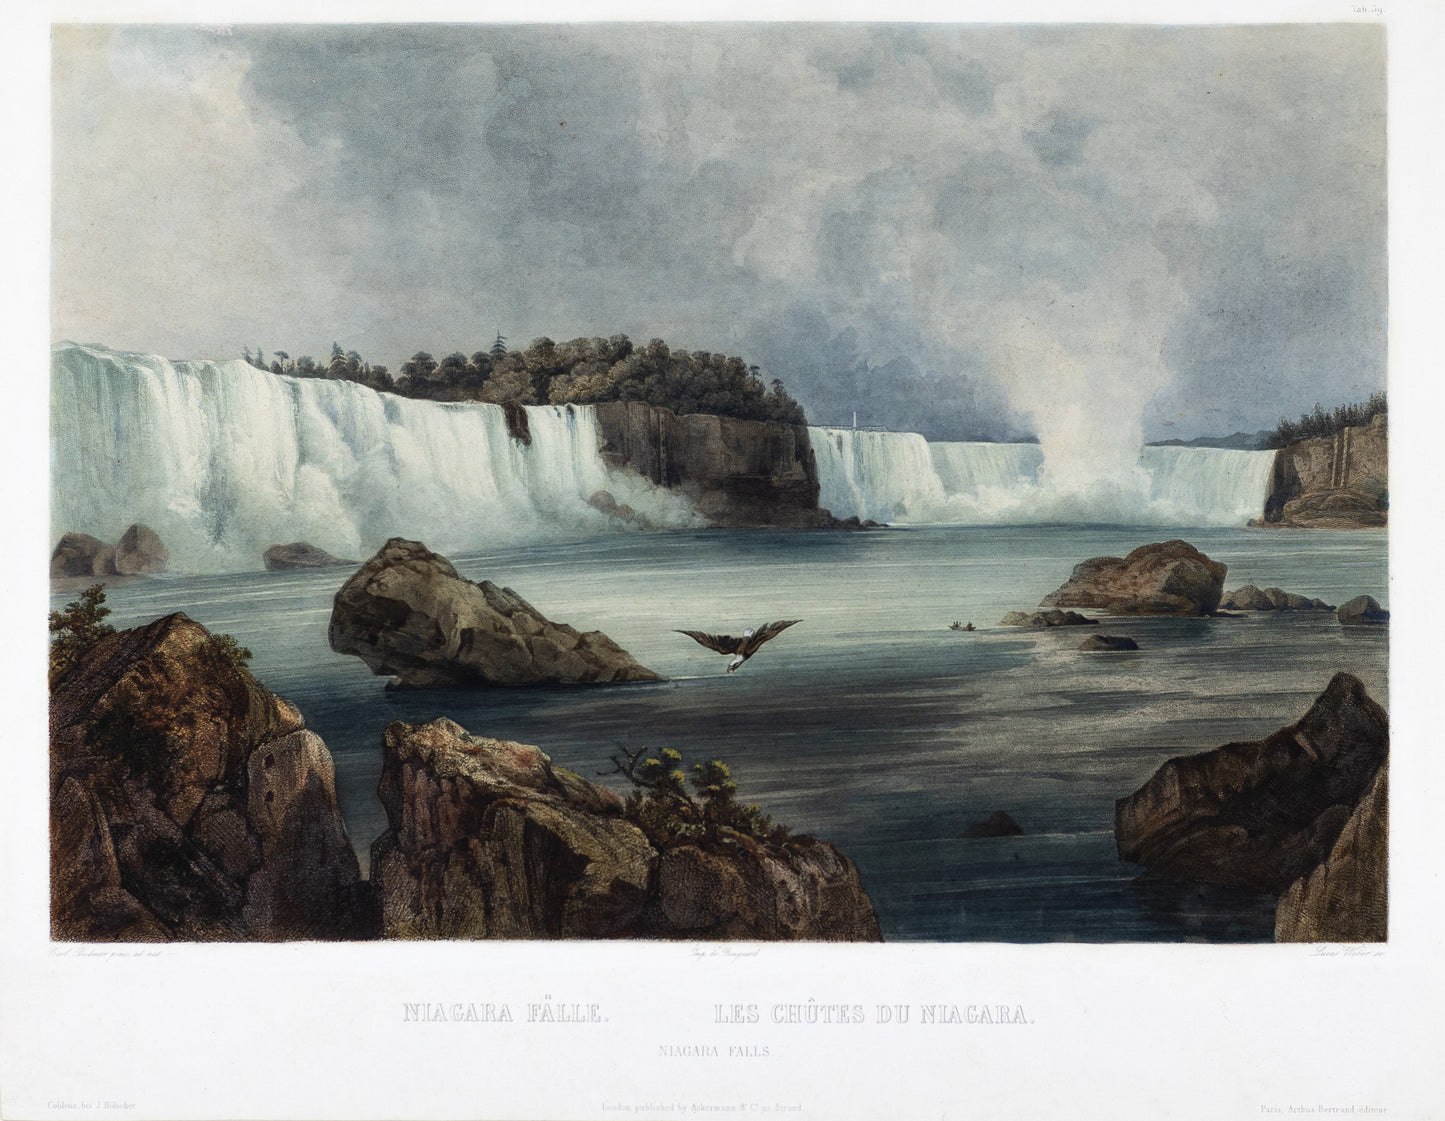 Karl Bodmer (1809-1893), Tab. 39, Niagara Falls